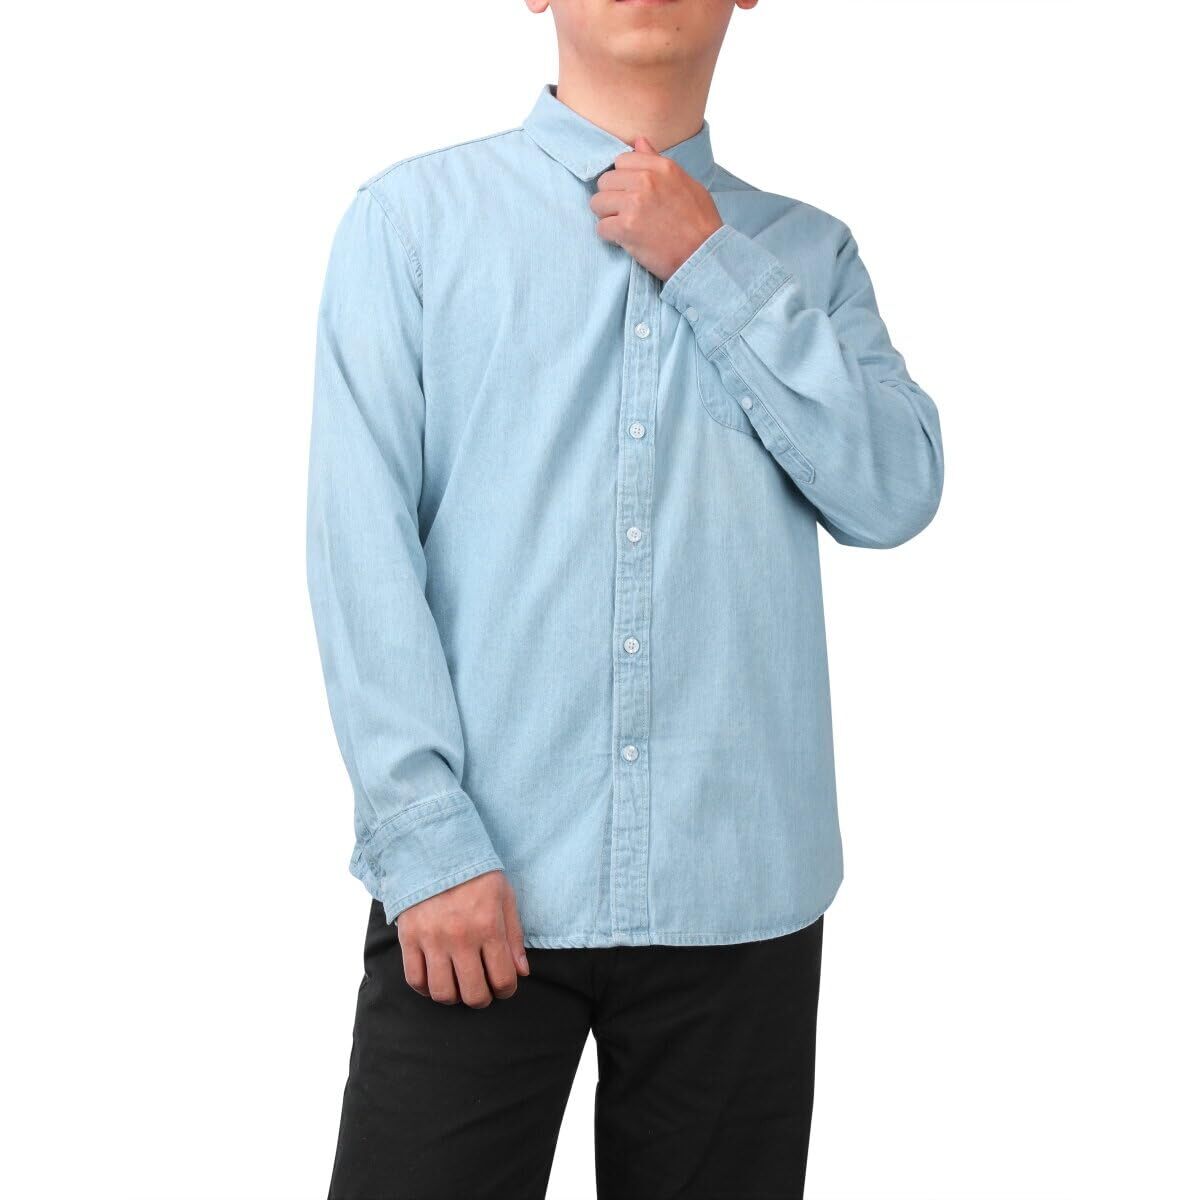 [YUNCLOS] Denim shirt men's shirt long sleeve casual Dungaree plain shirt 